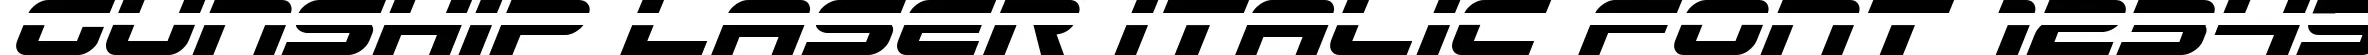 Dynamic Gunship Laser Italic Font Preview https://safirsoft.com